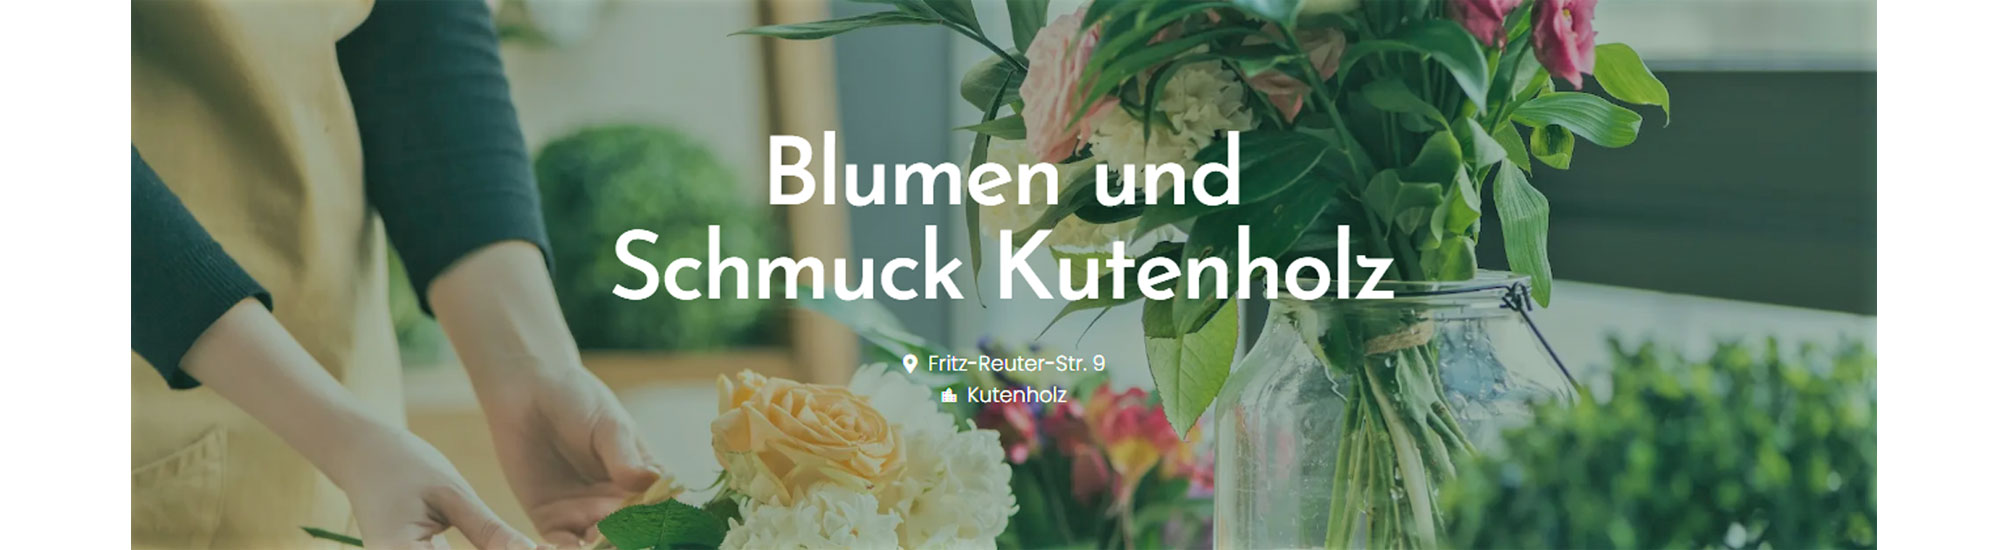 Blumen & Schmuck Kutenholz